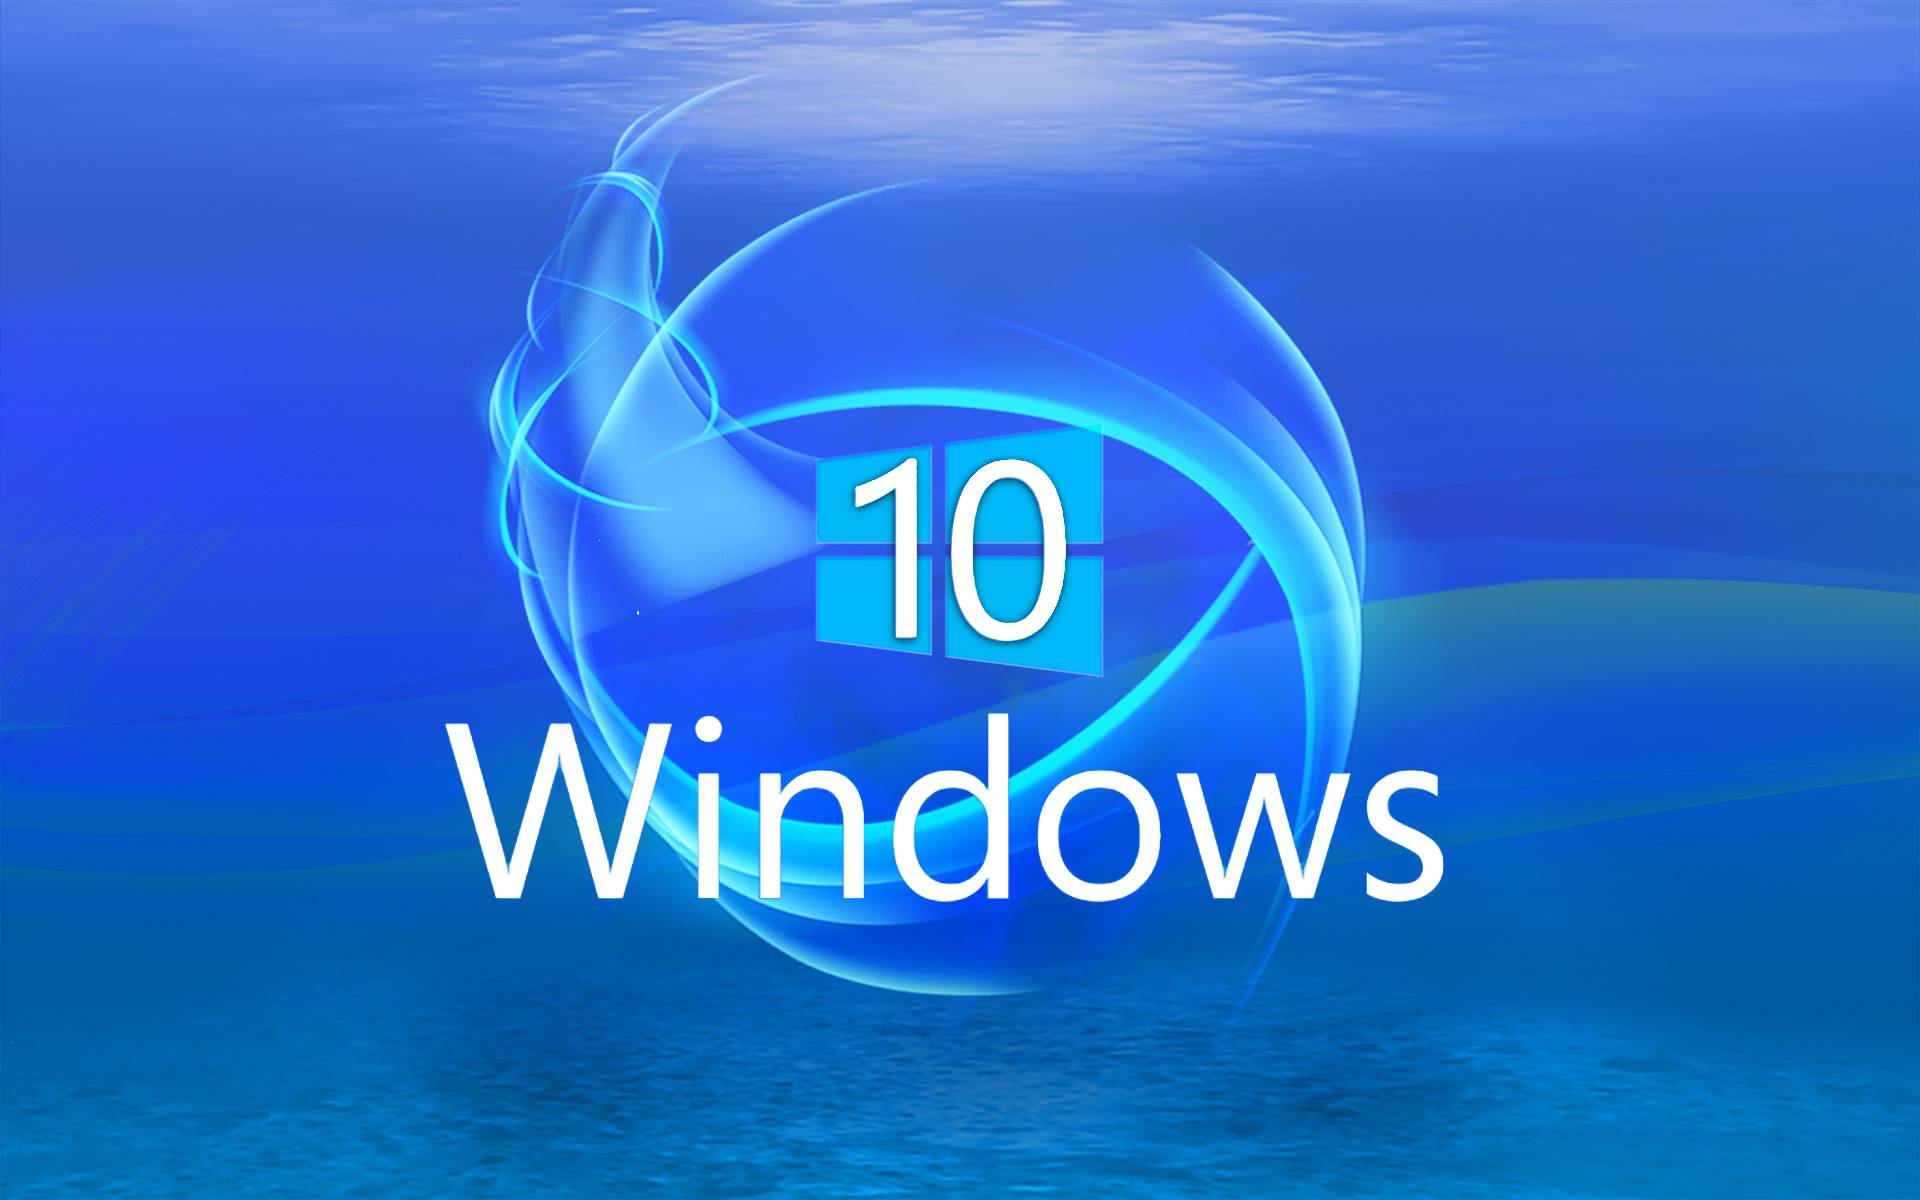 Windows 10 photos from the lock screen · free photo